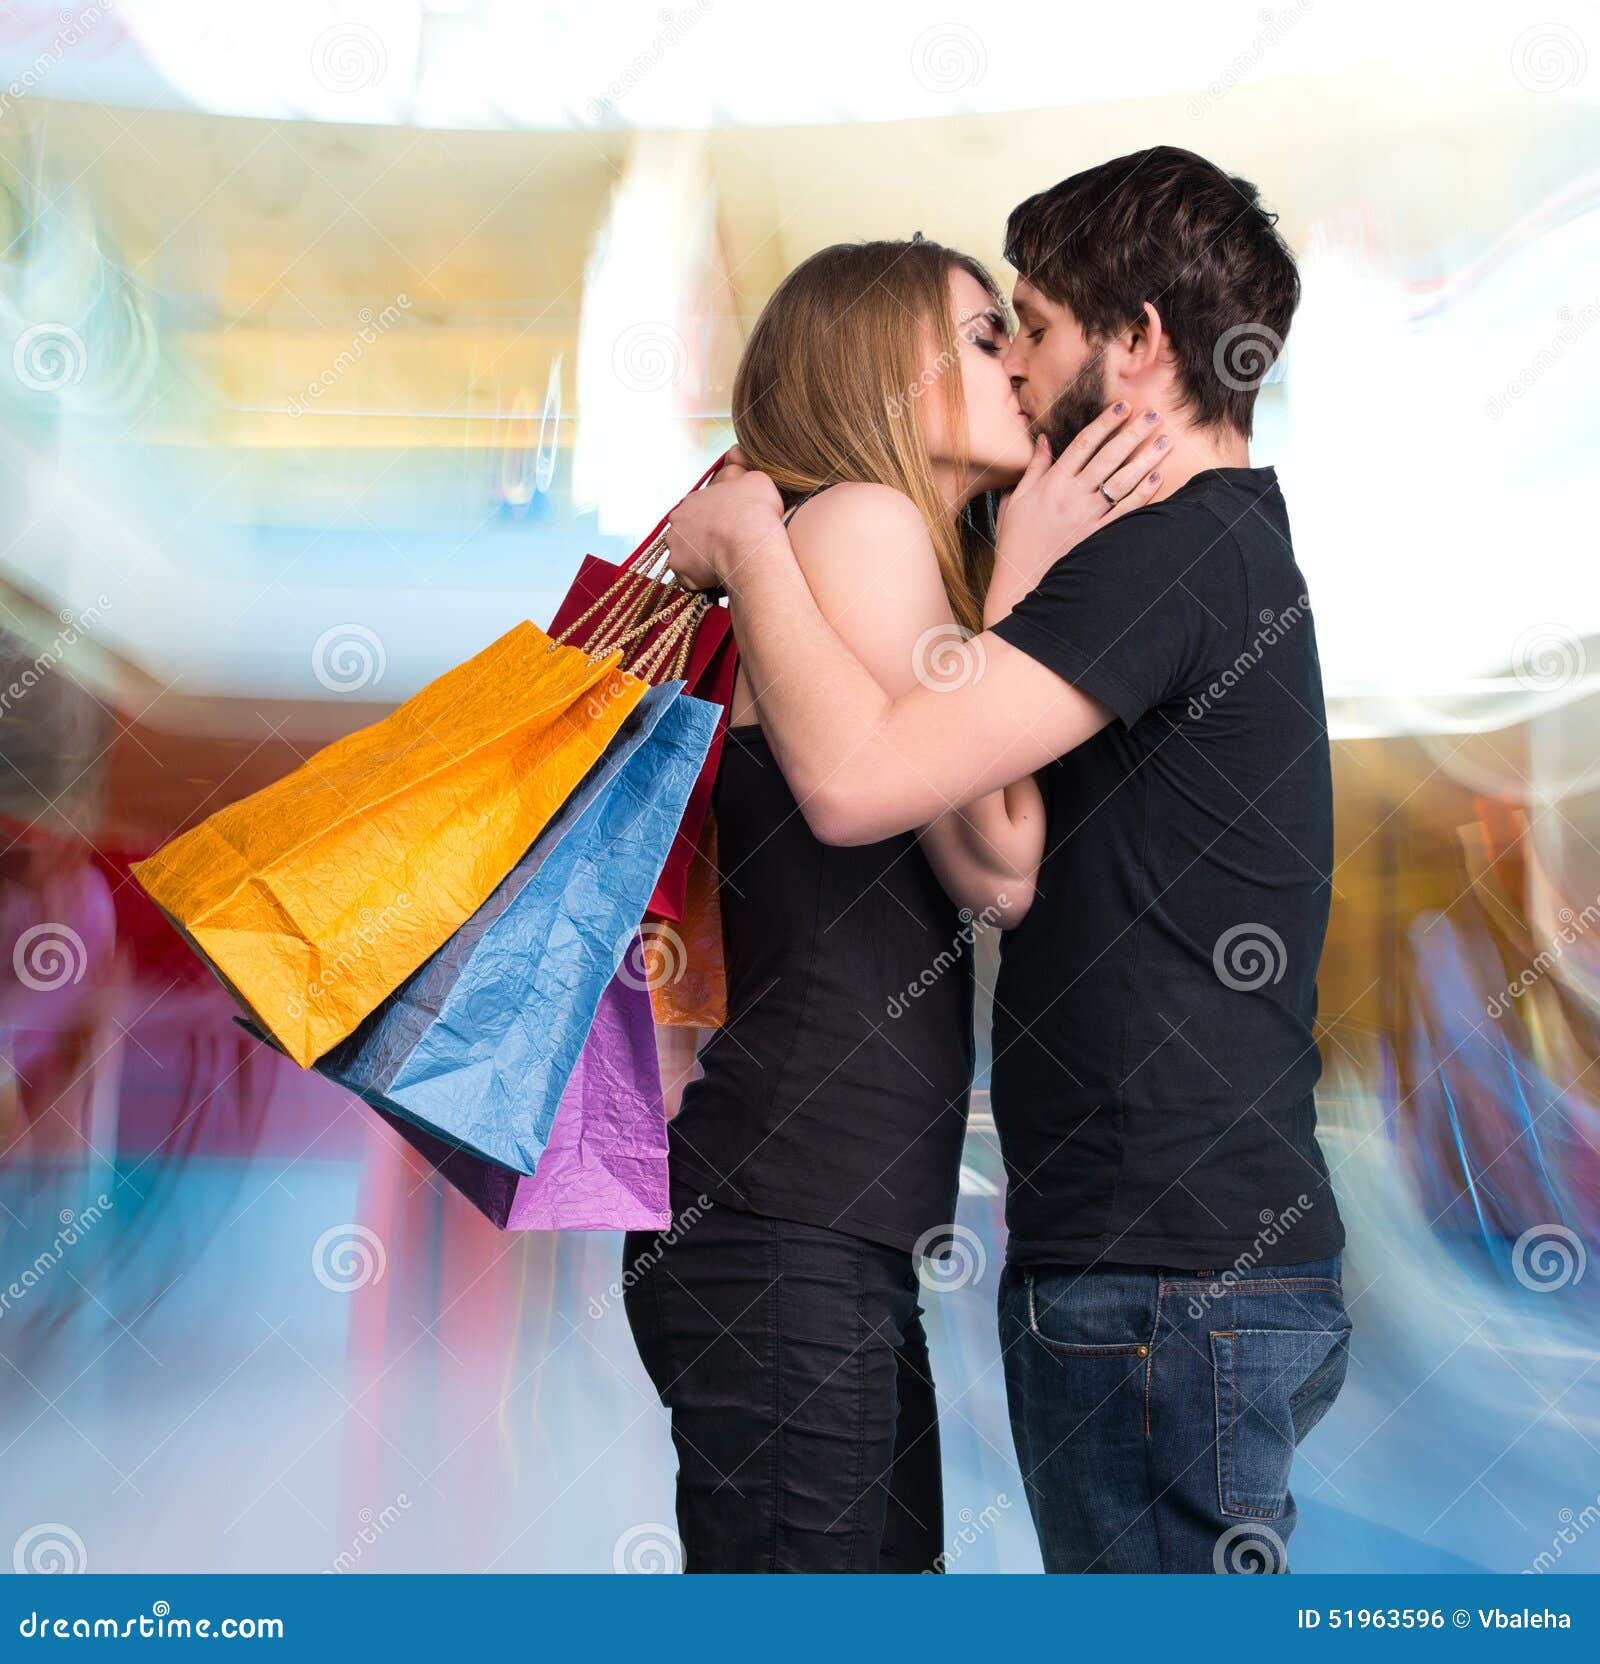 [Image: happy-kissing-couple-shopping-bags-mall-51963596.jpg]